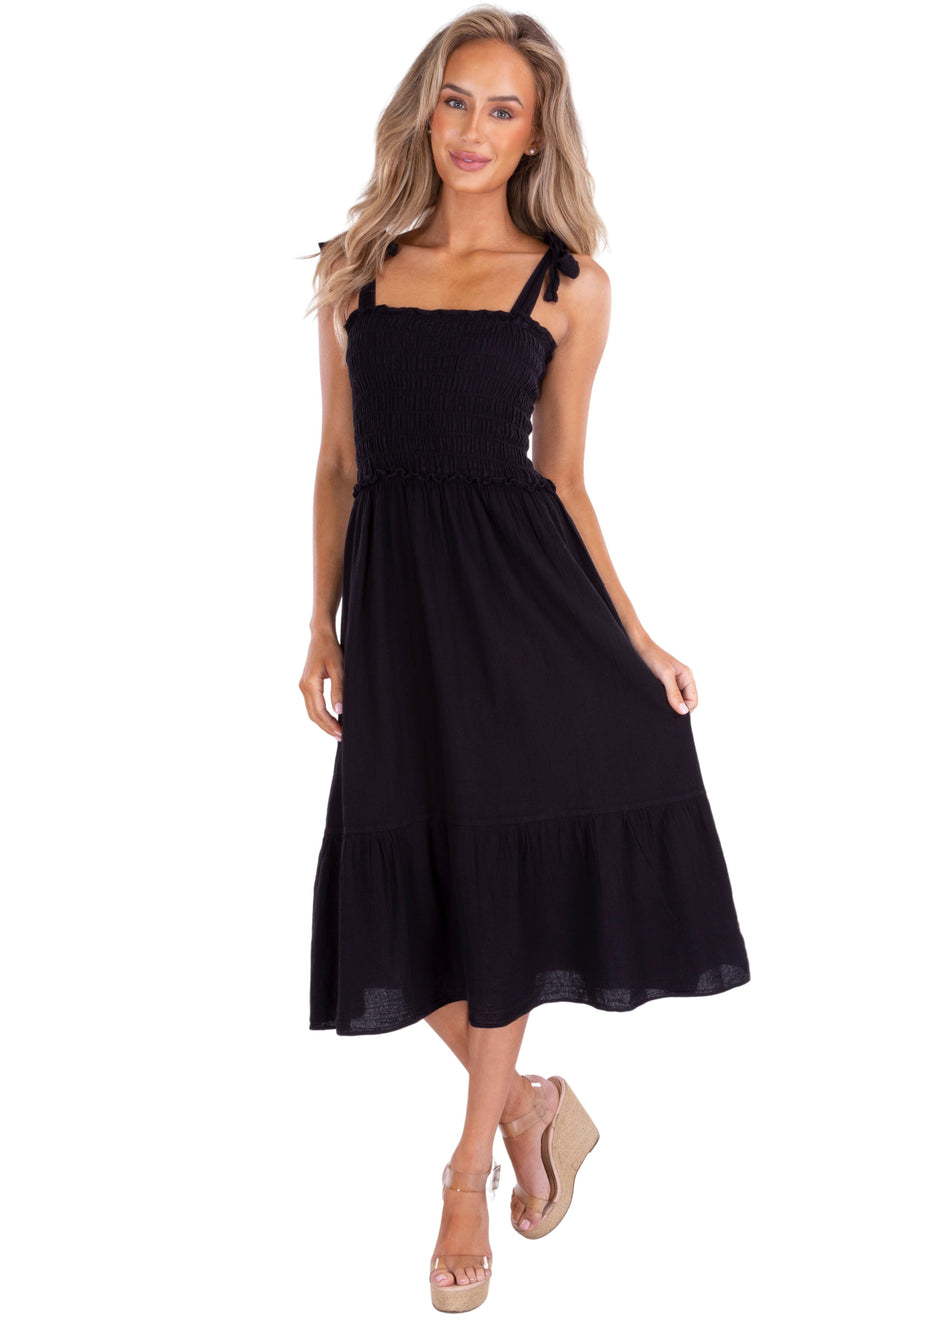 NW1428 - Black Cotton Dress